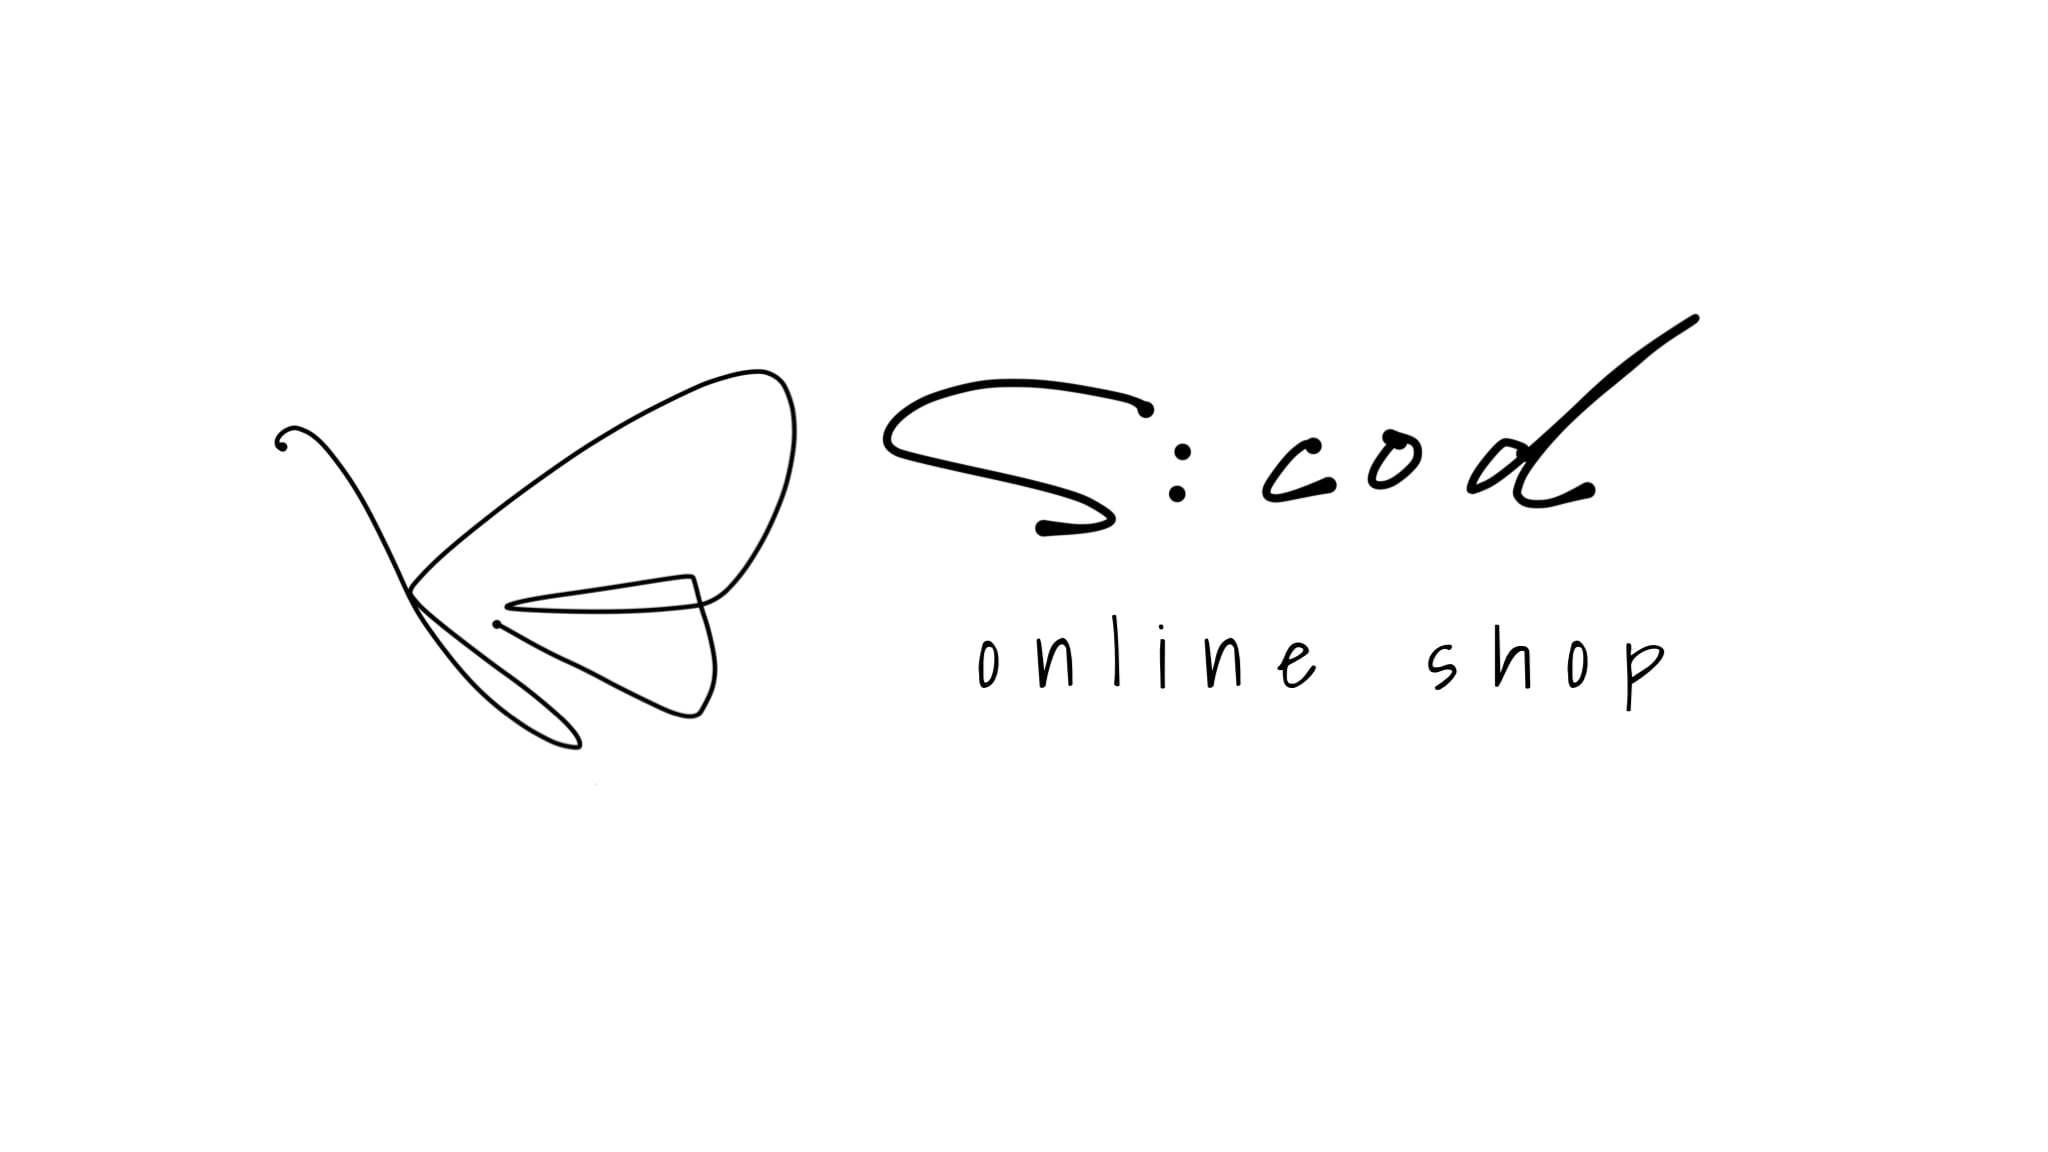 s:cod online shop